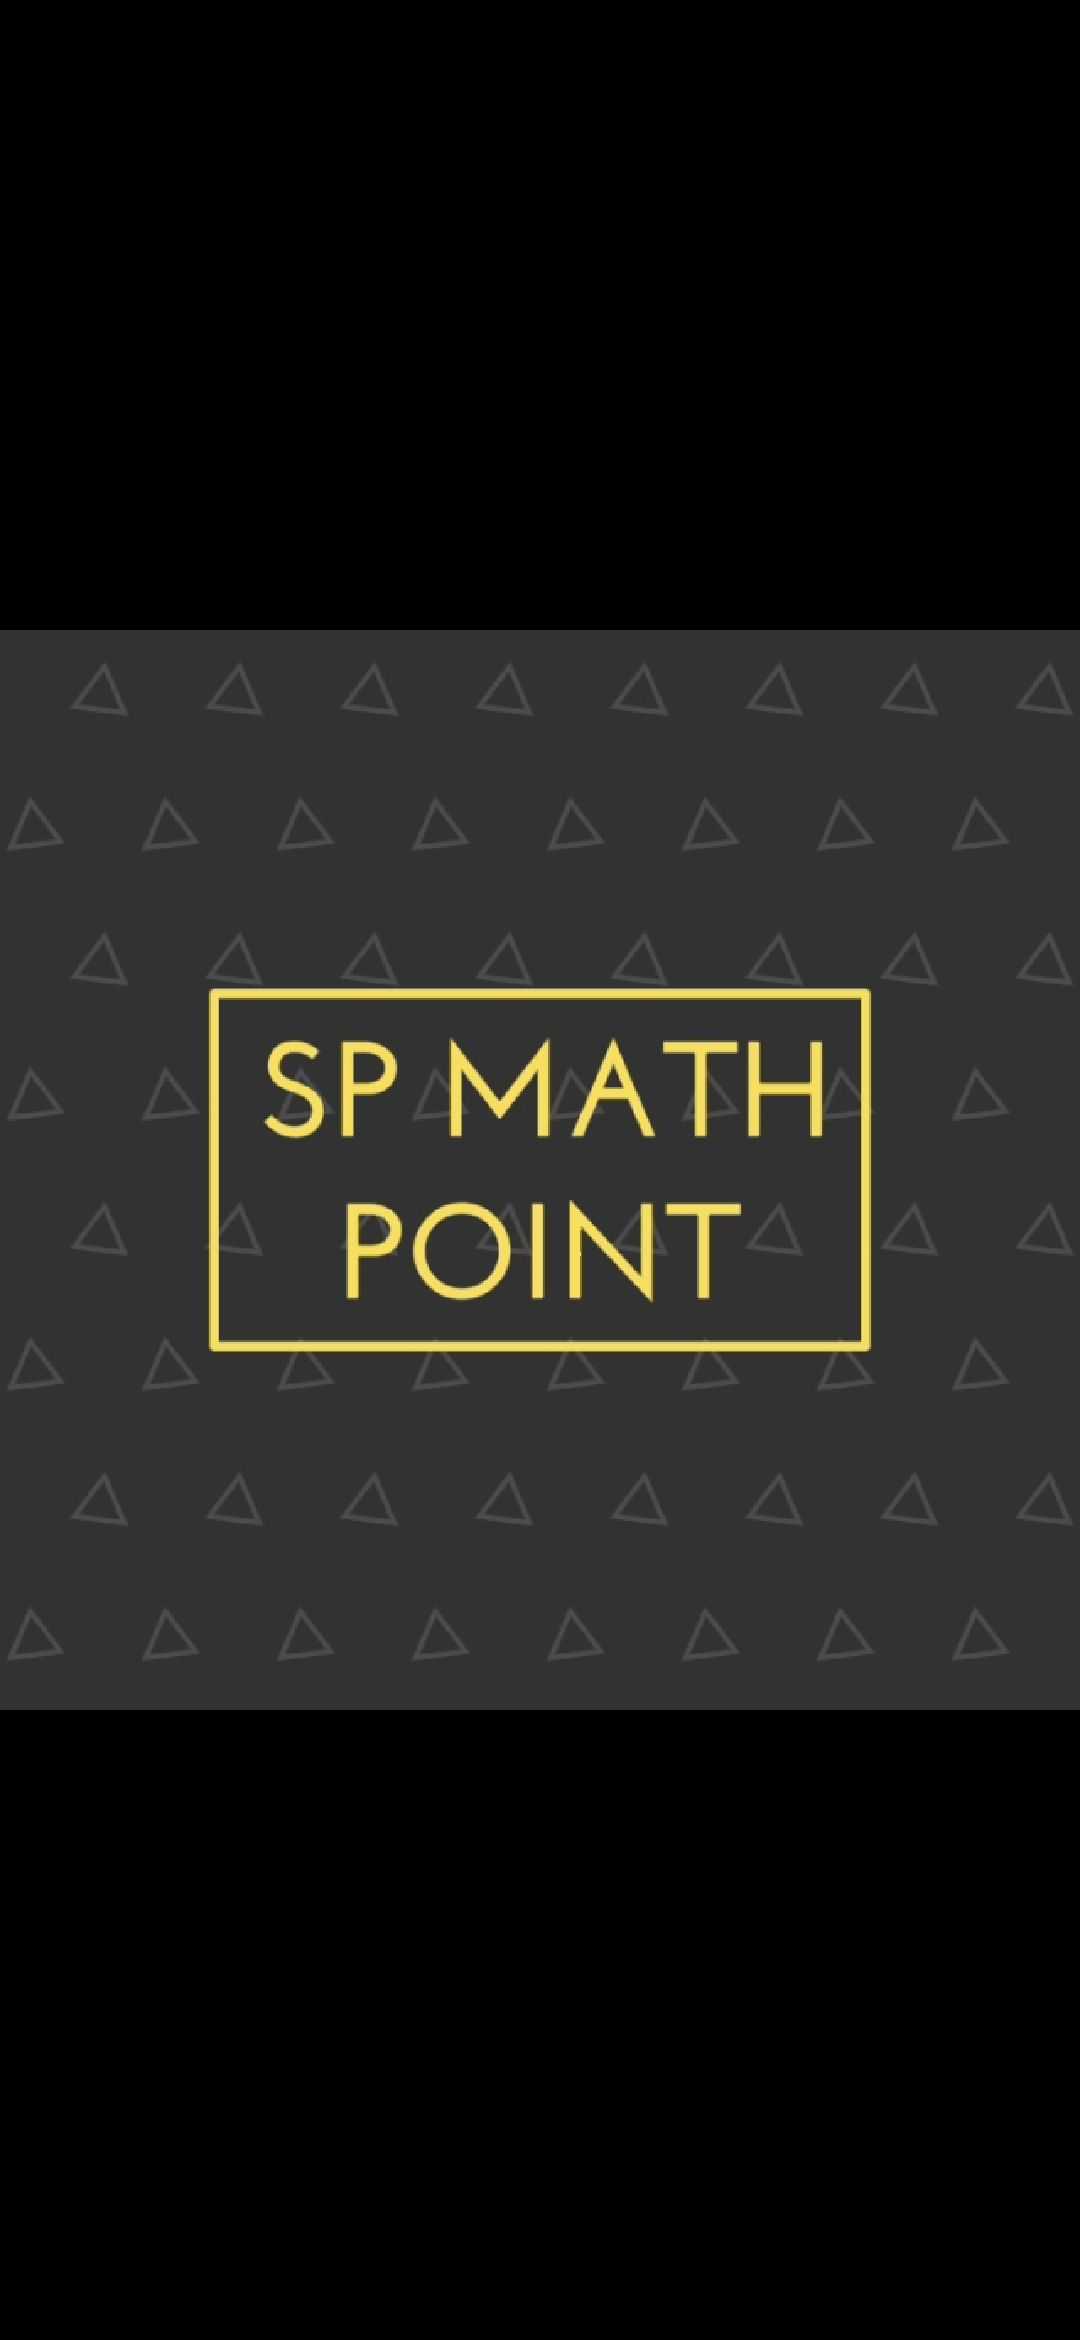 SP Math Point; Online Classes; Teach Online; Online Teaching; Virtual Classroom